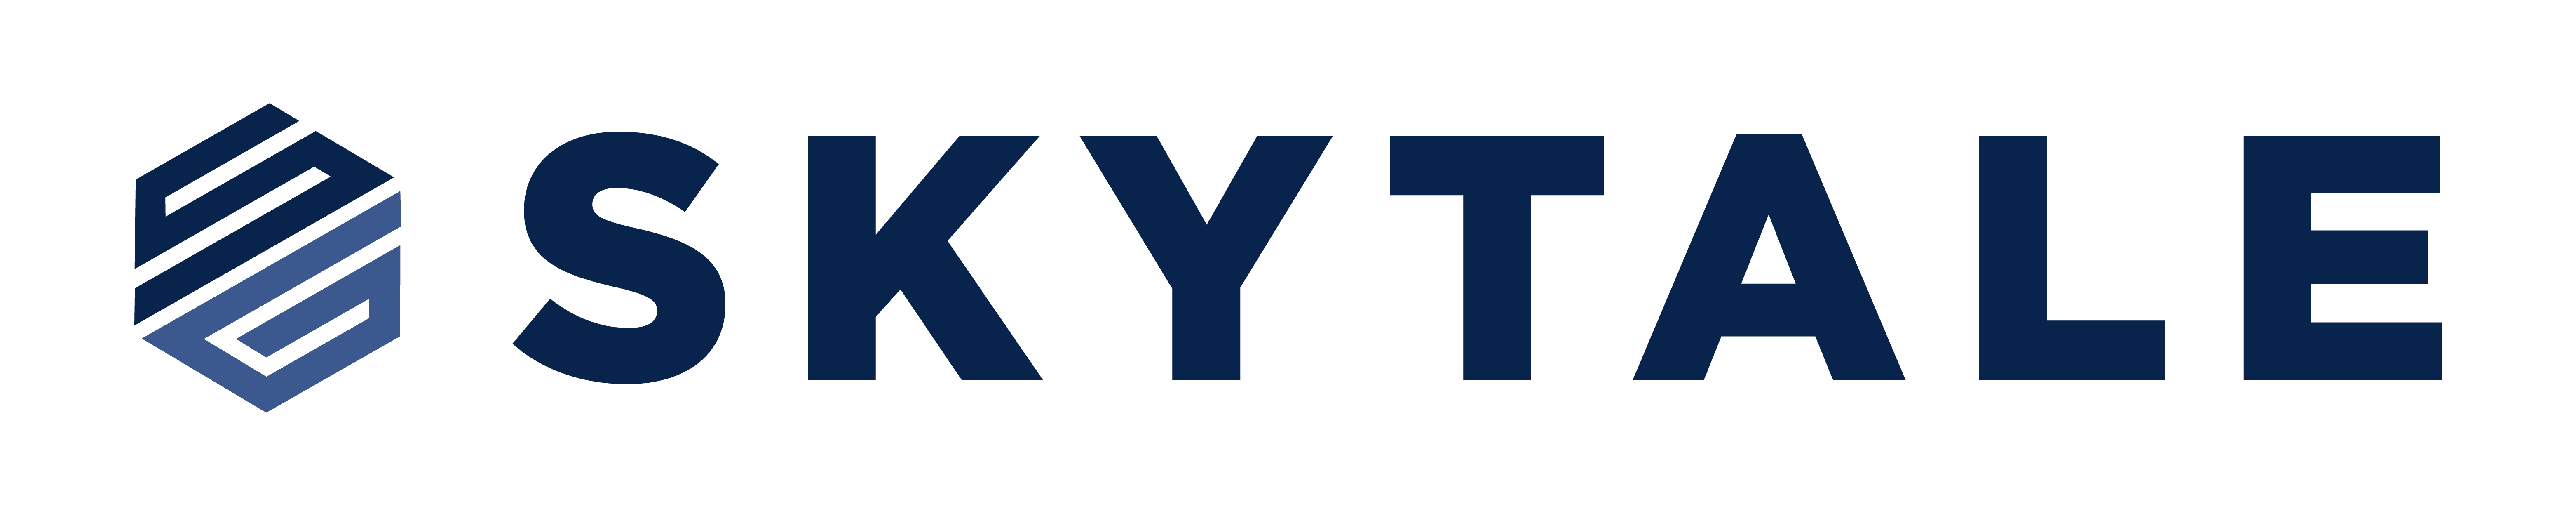 Skytale Group Horizontal Logo Version 2 Skytale Left 1